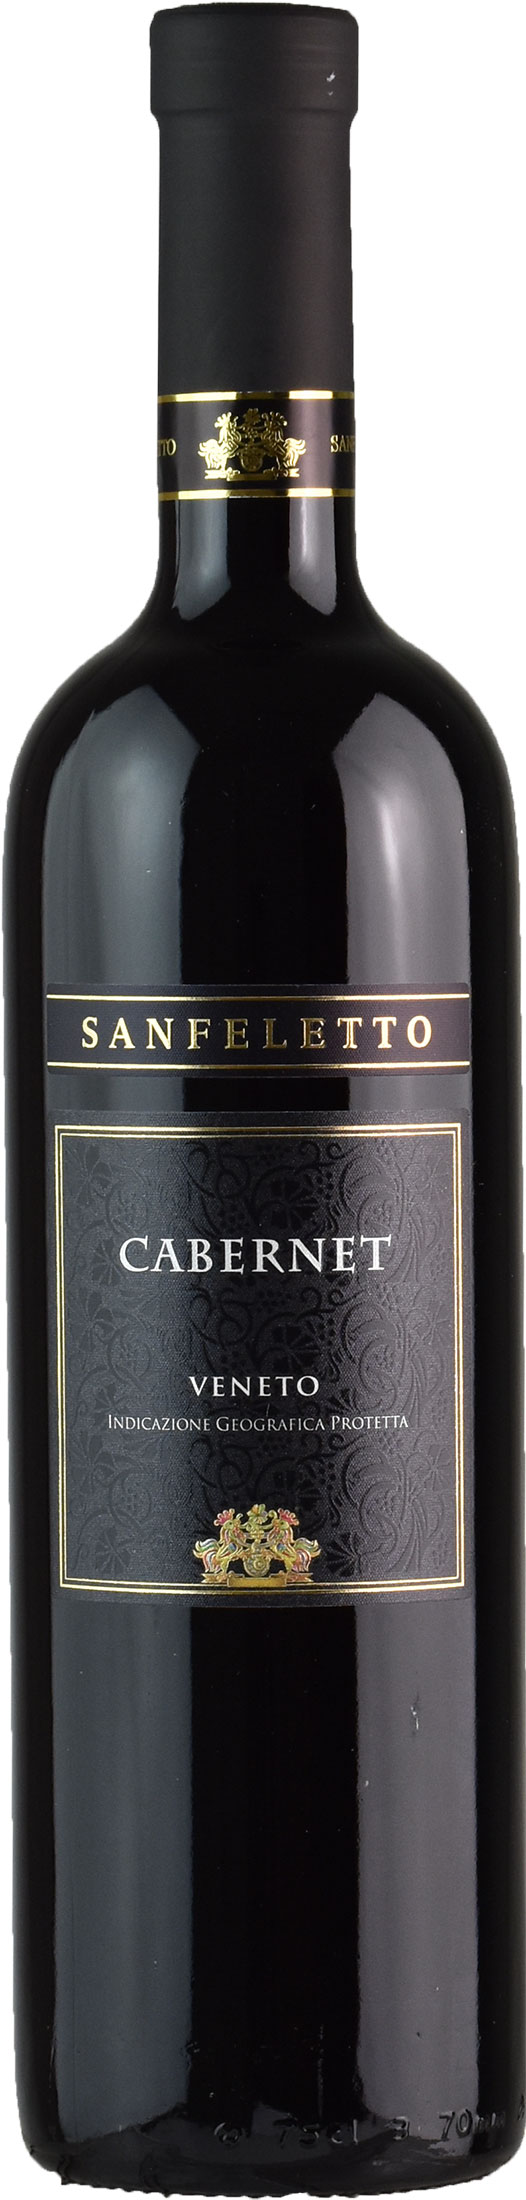 Sanfeletto Cabernet